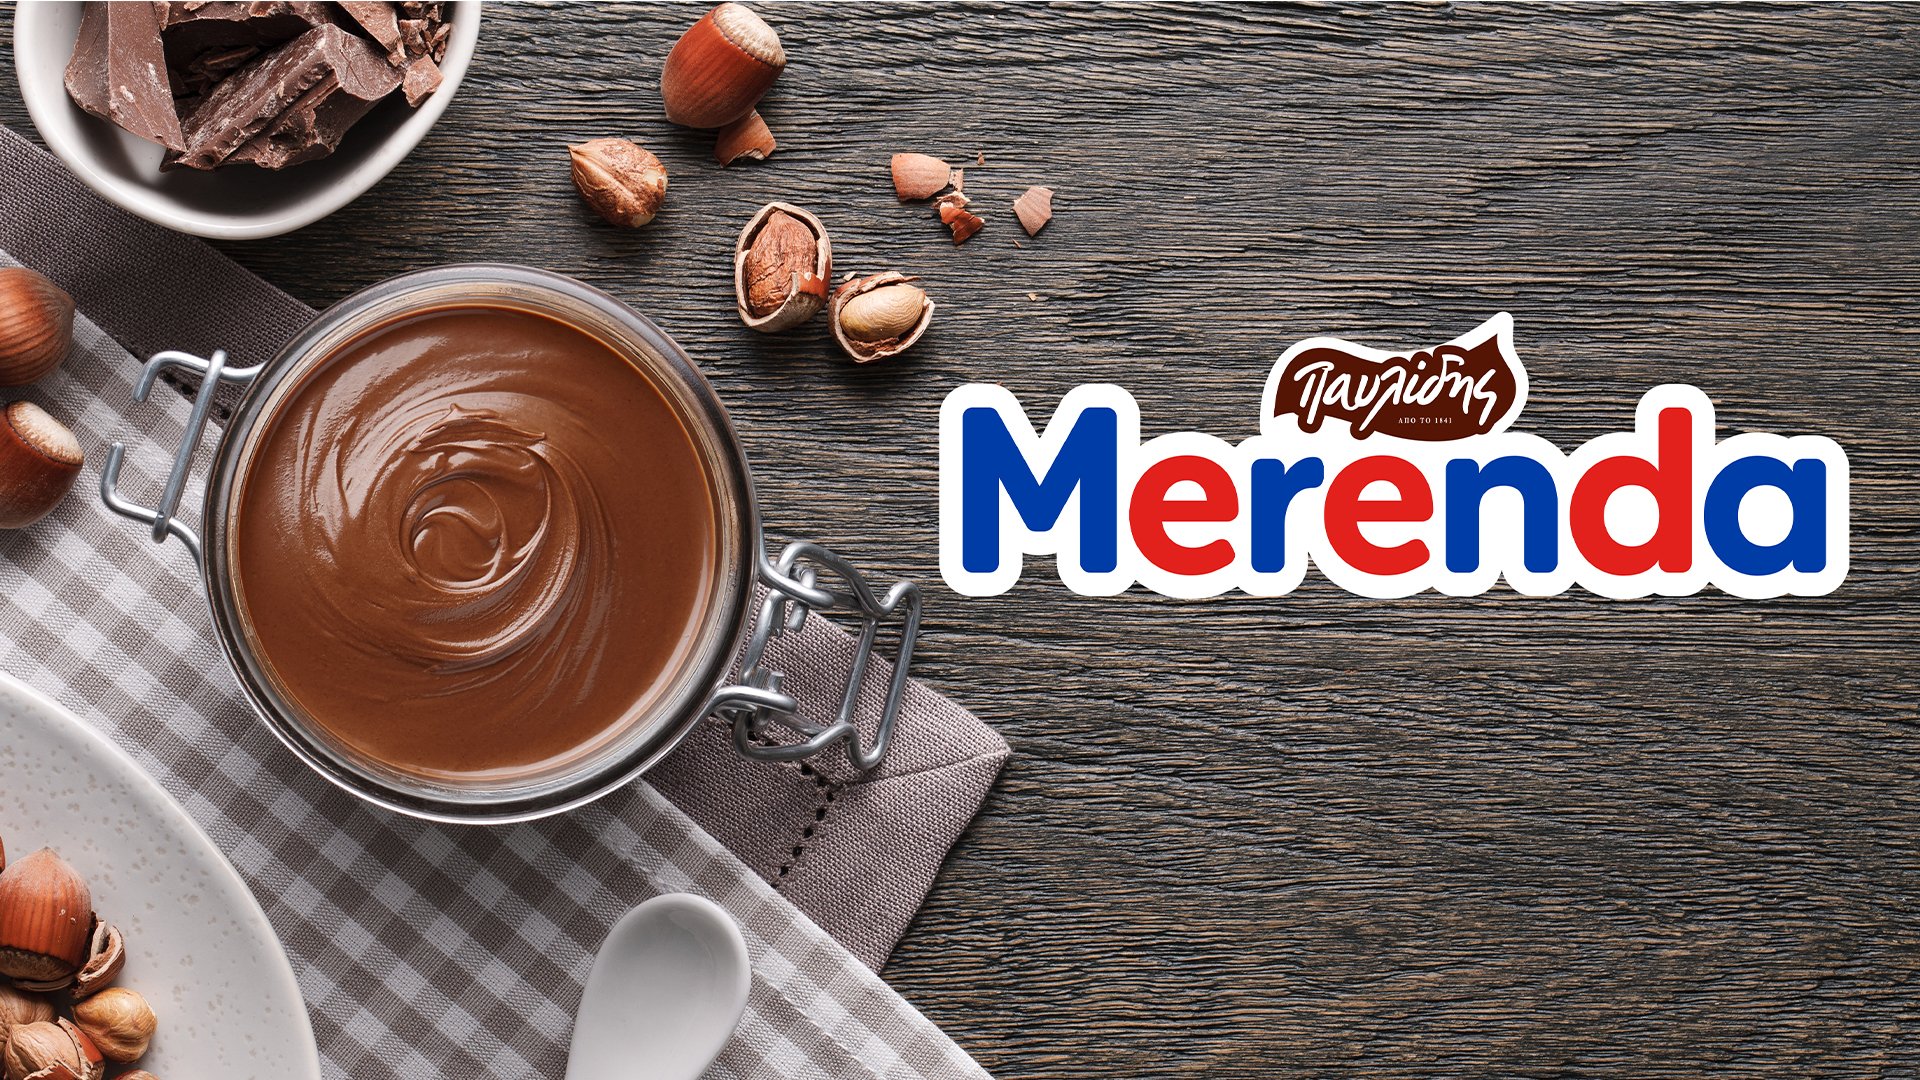 Photography of a jar filled with Merenda hazelnut praline next to the new Merenda logo